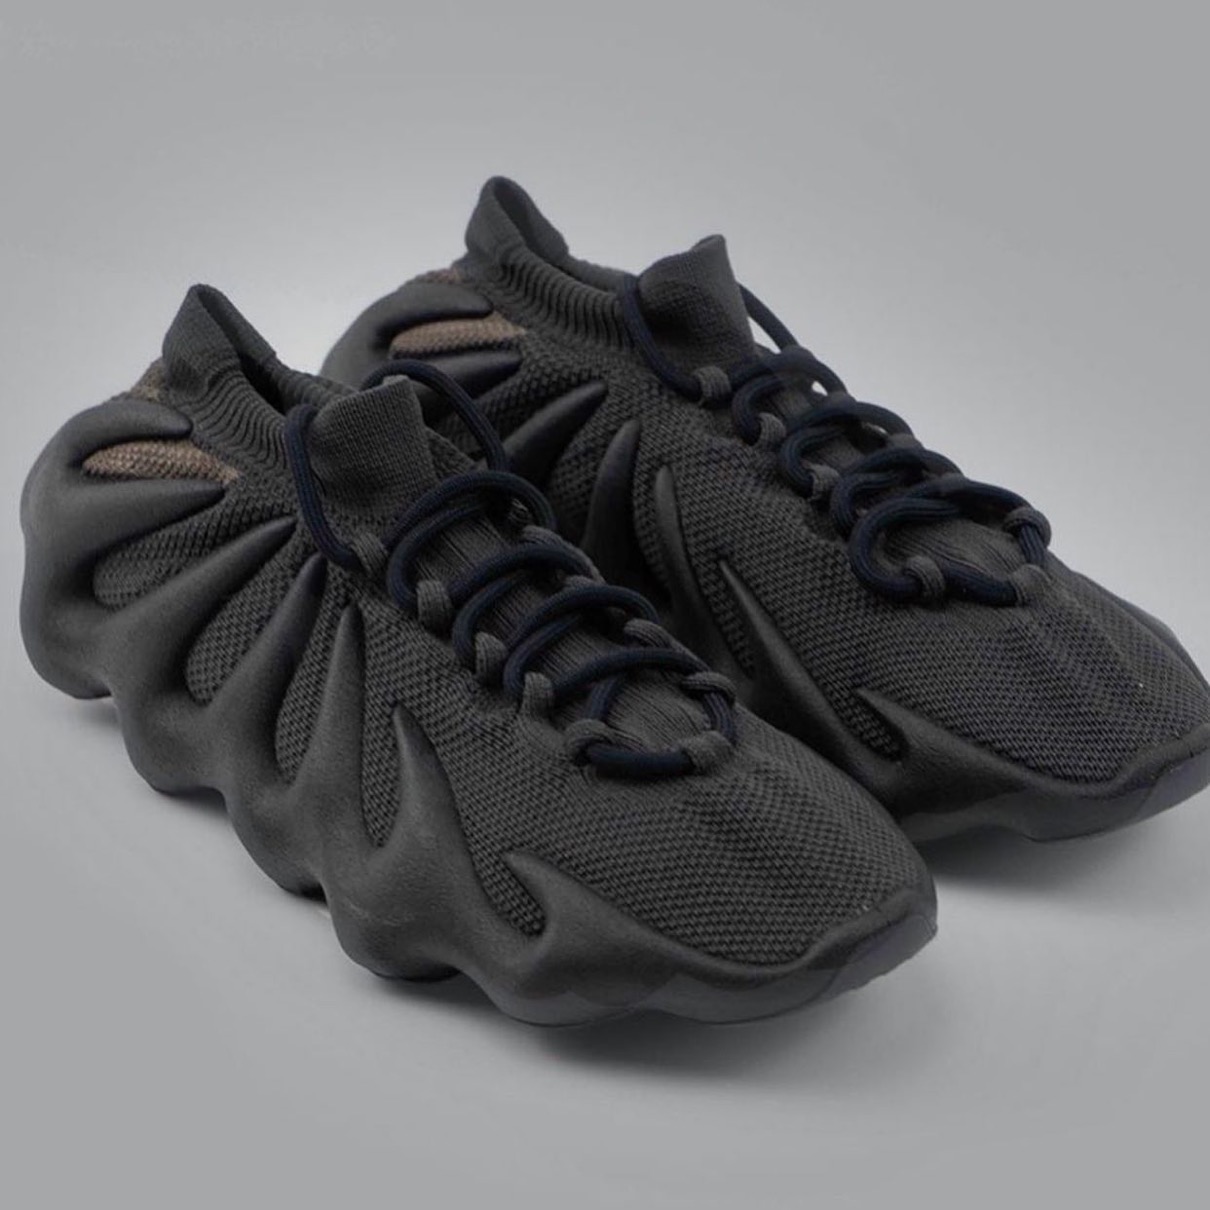 adidas】YEEZY 450 “DARK SLATE”が国内12月17日にリストック発売予定 ...